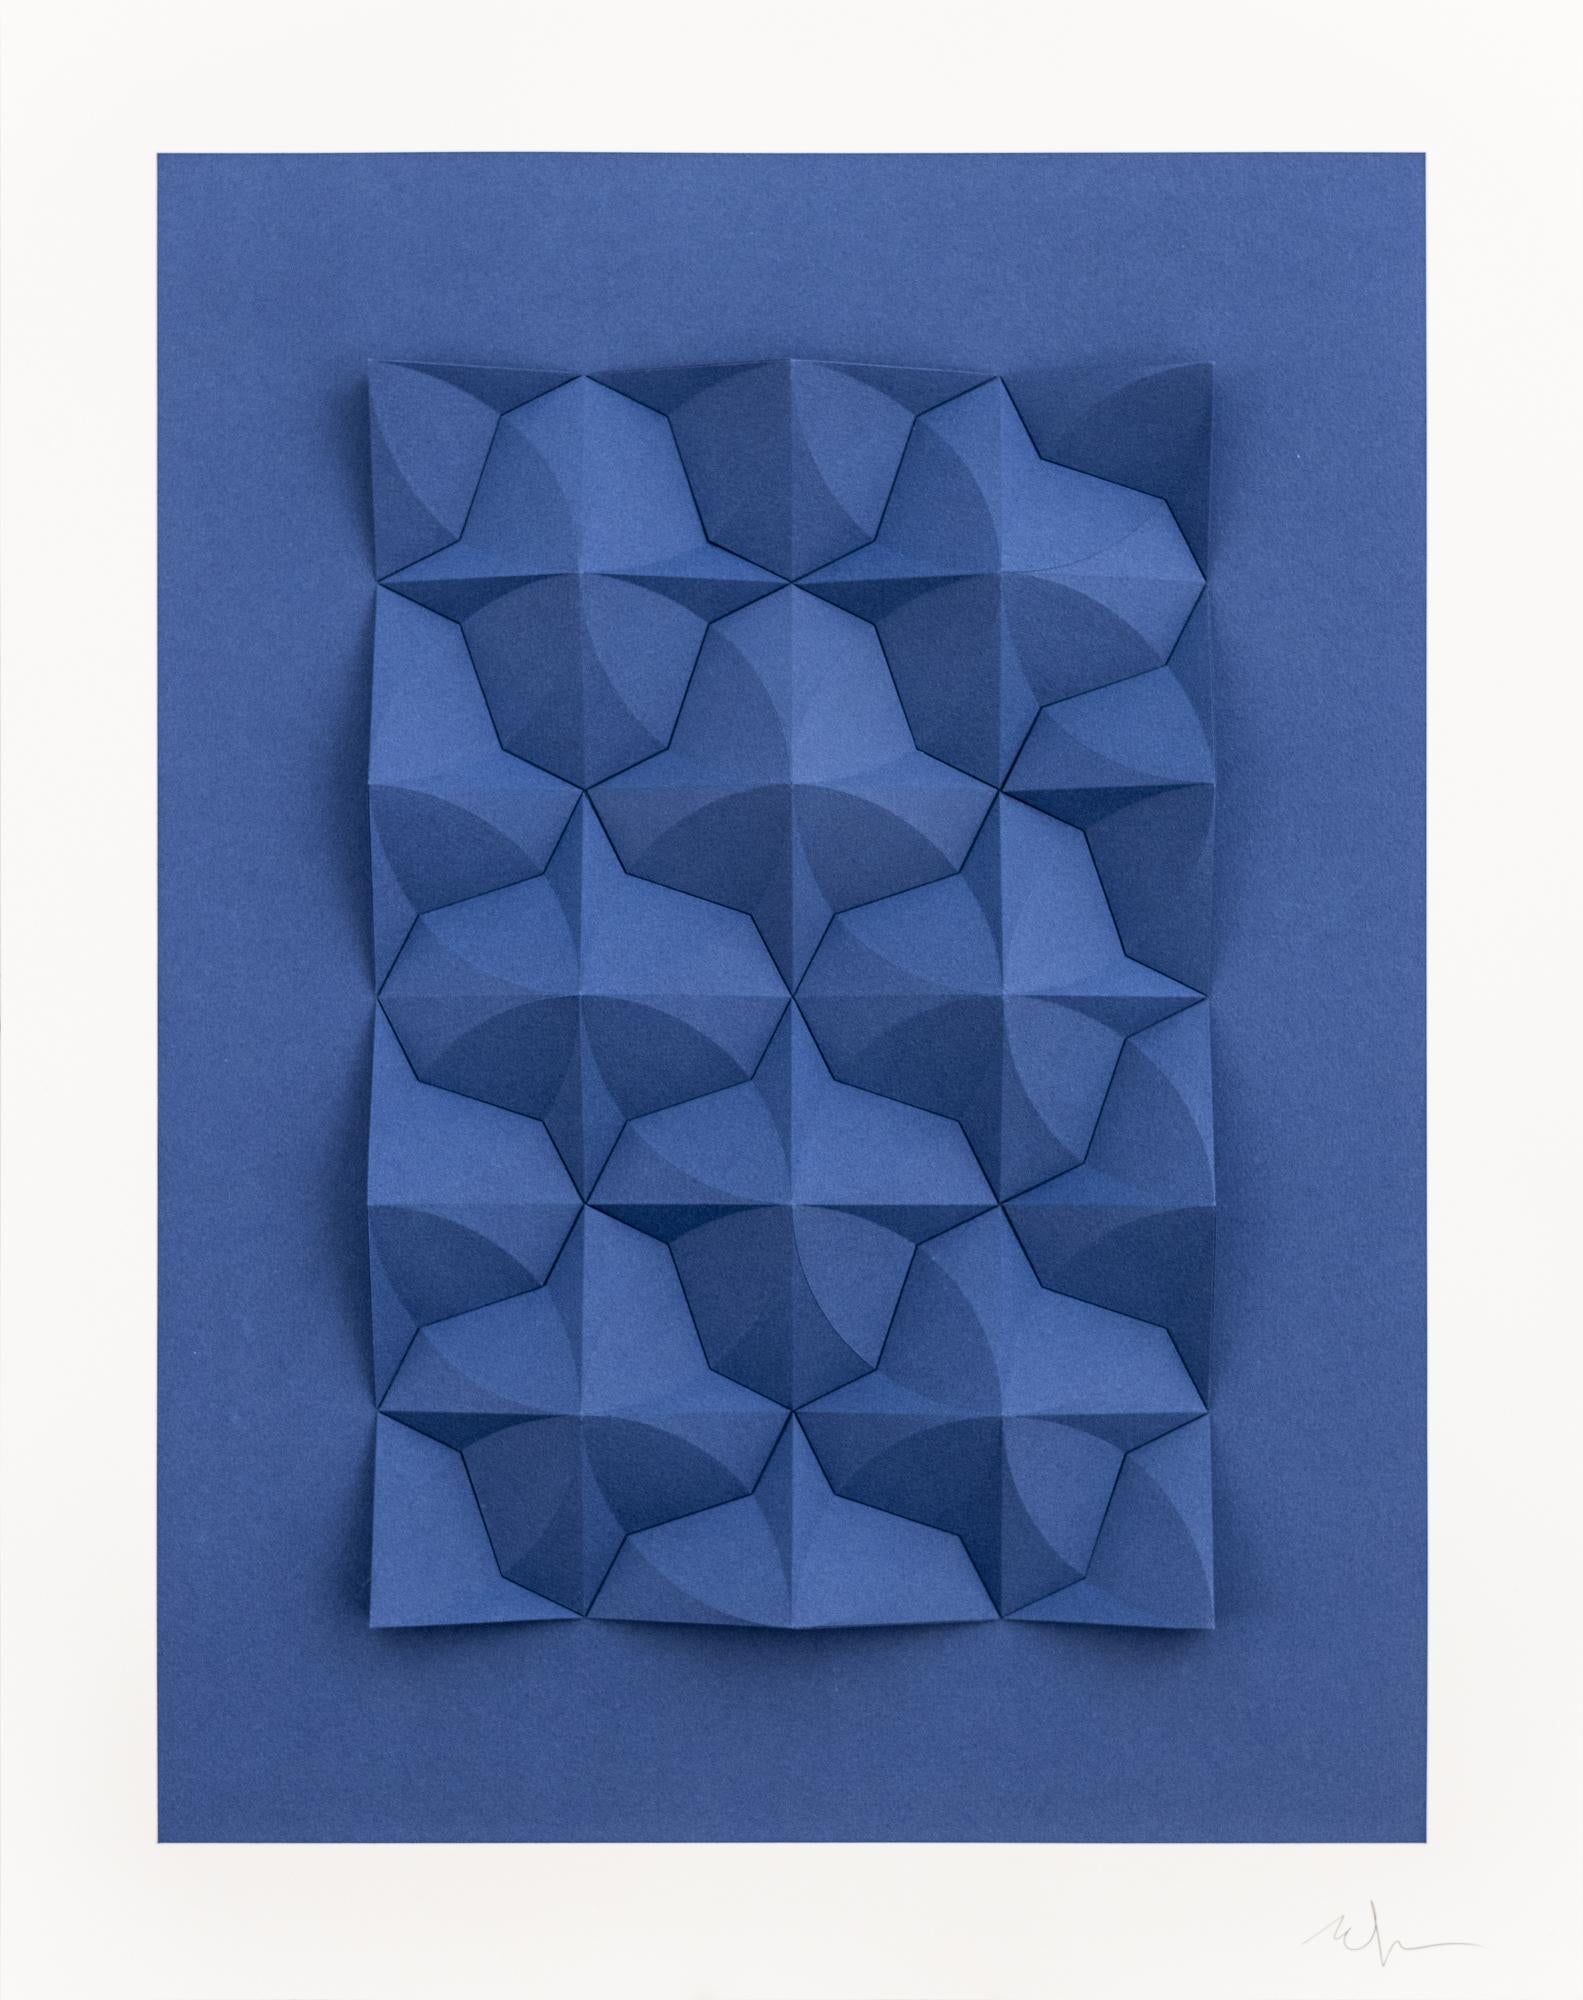 "Omoplata 162 in Royal Blue", Hand-Folded Archival Paper, Abstract Patterns - Mixed Media Art by Matt Shlian